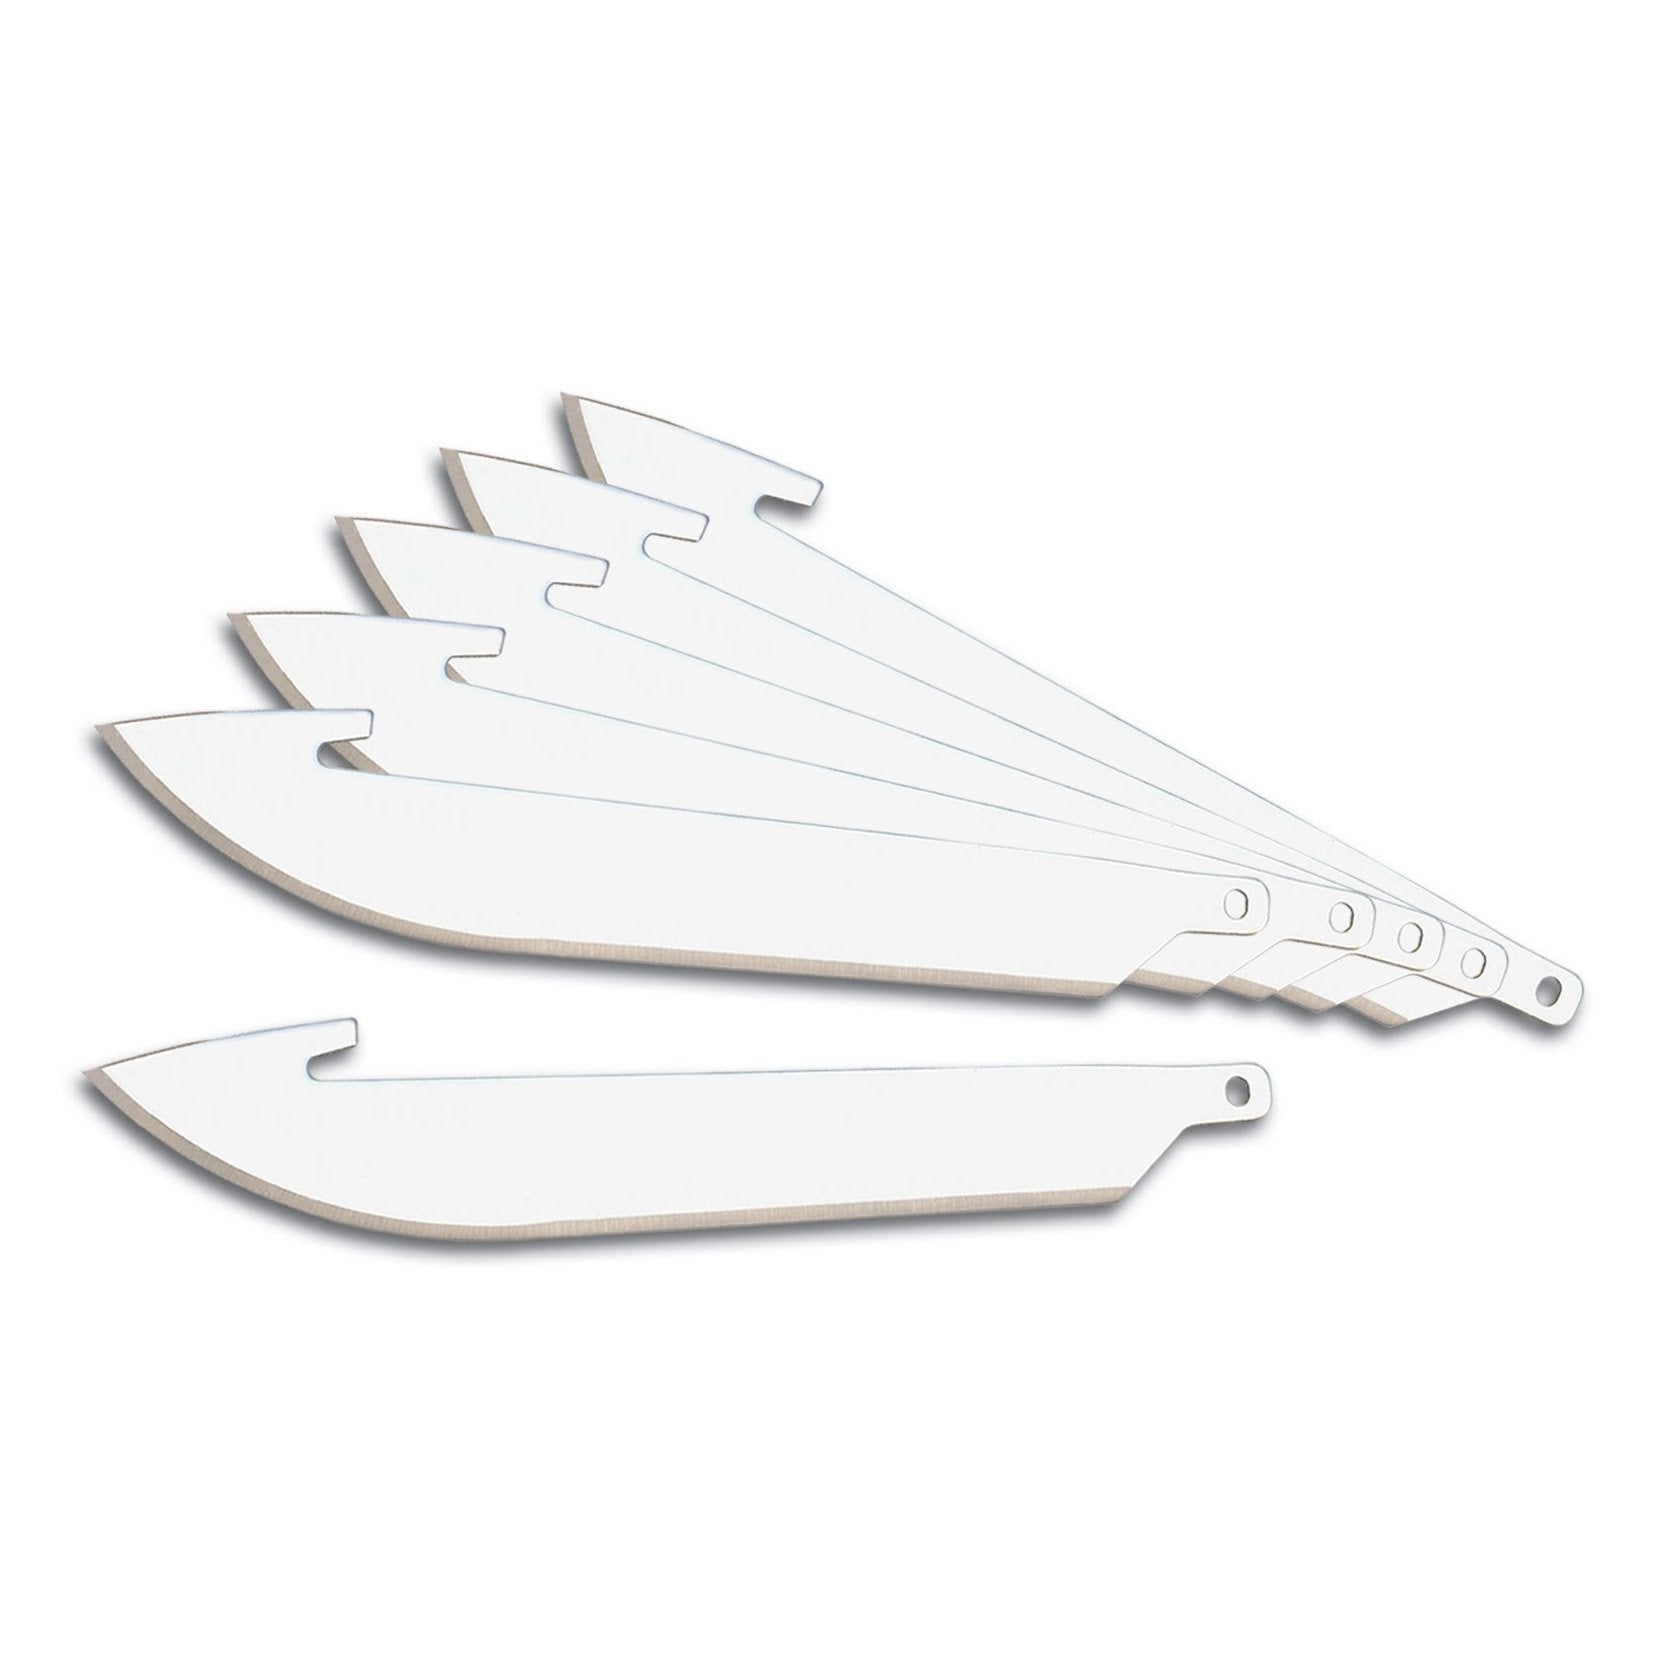 Outdoor Edge 3.5" Razorsafe Series Drop Point 6 Replaceable Blades - Pacific Flyway Supplies